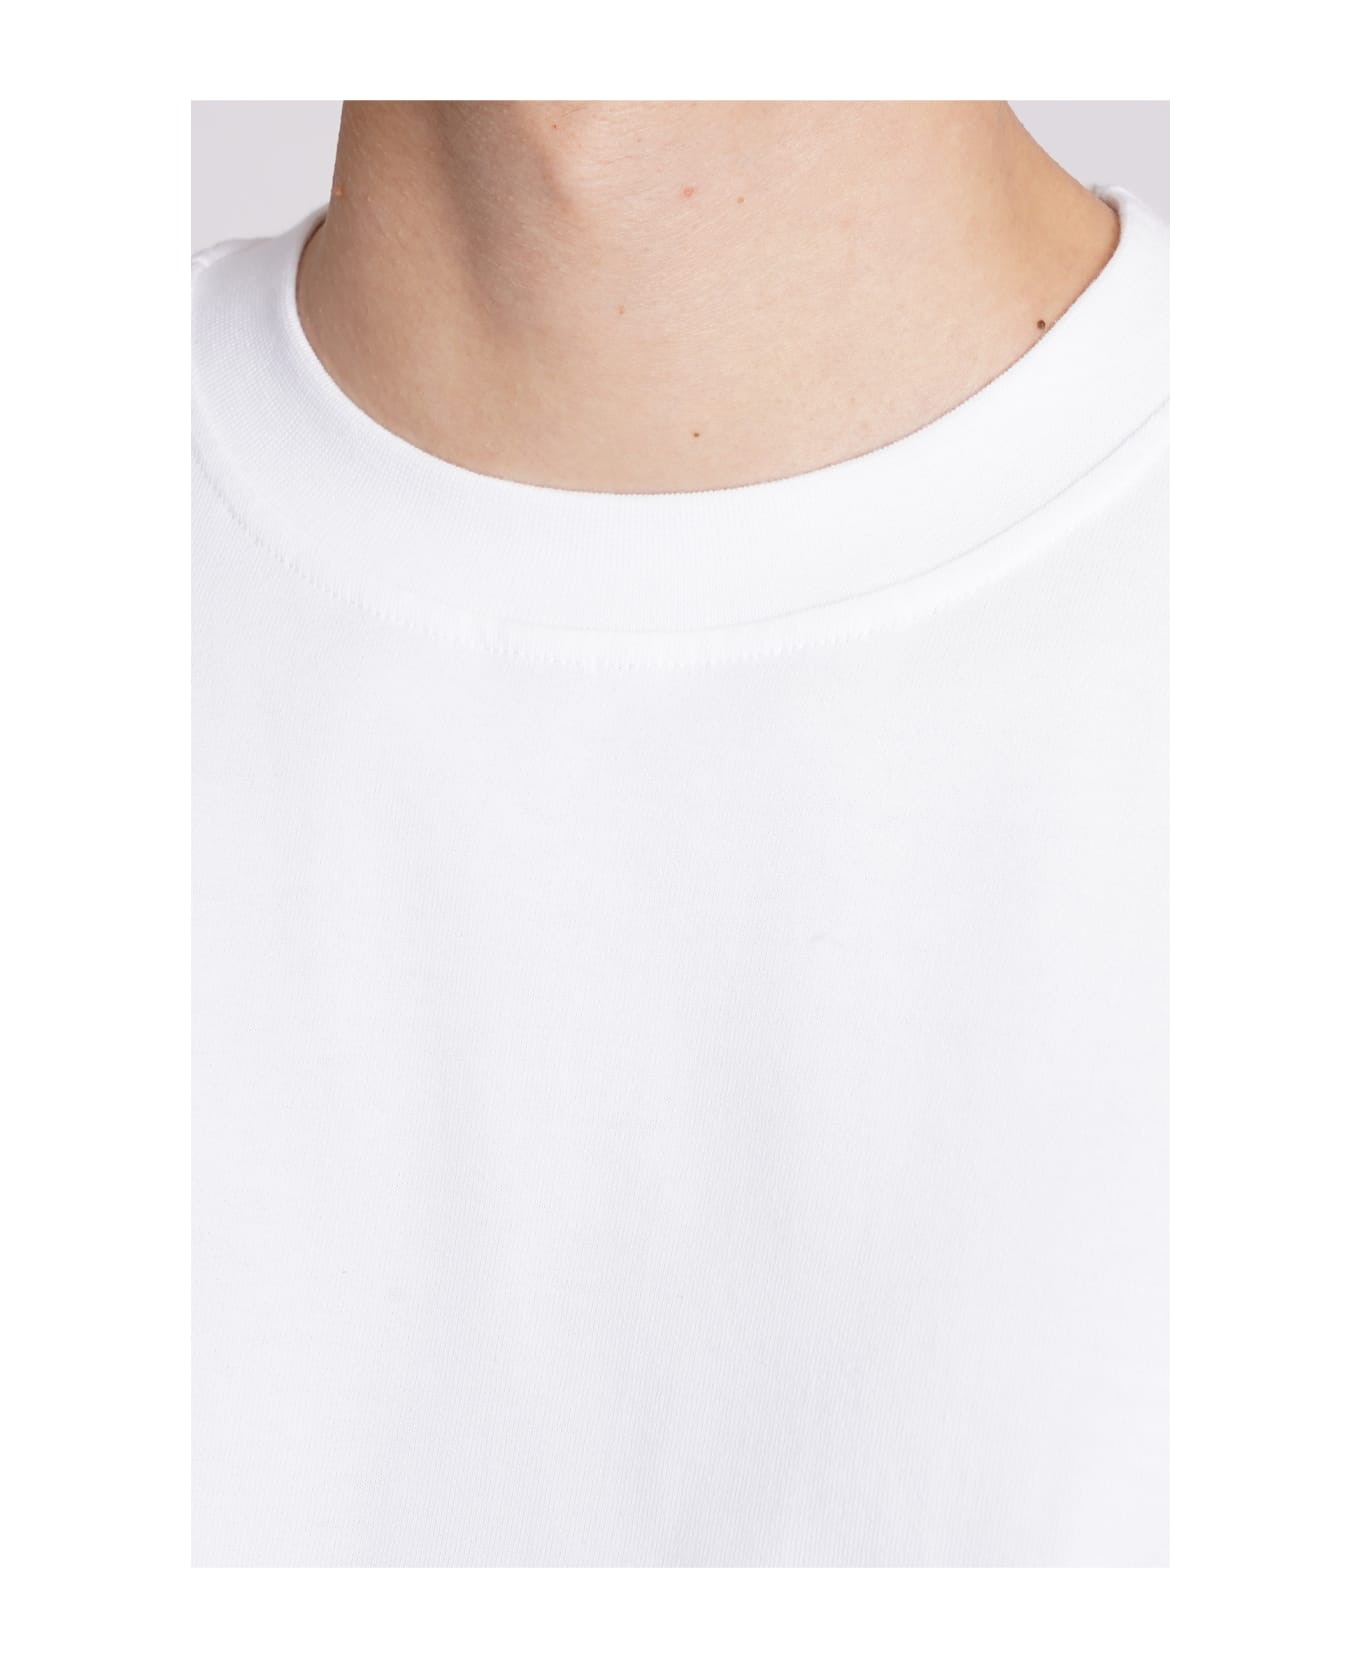 Séfr T-shirt In White Cotton - white